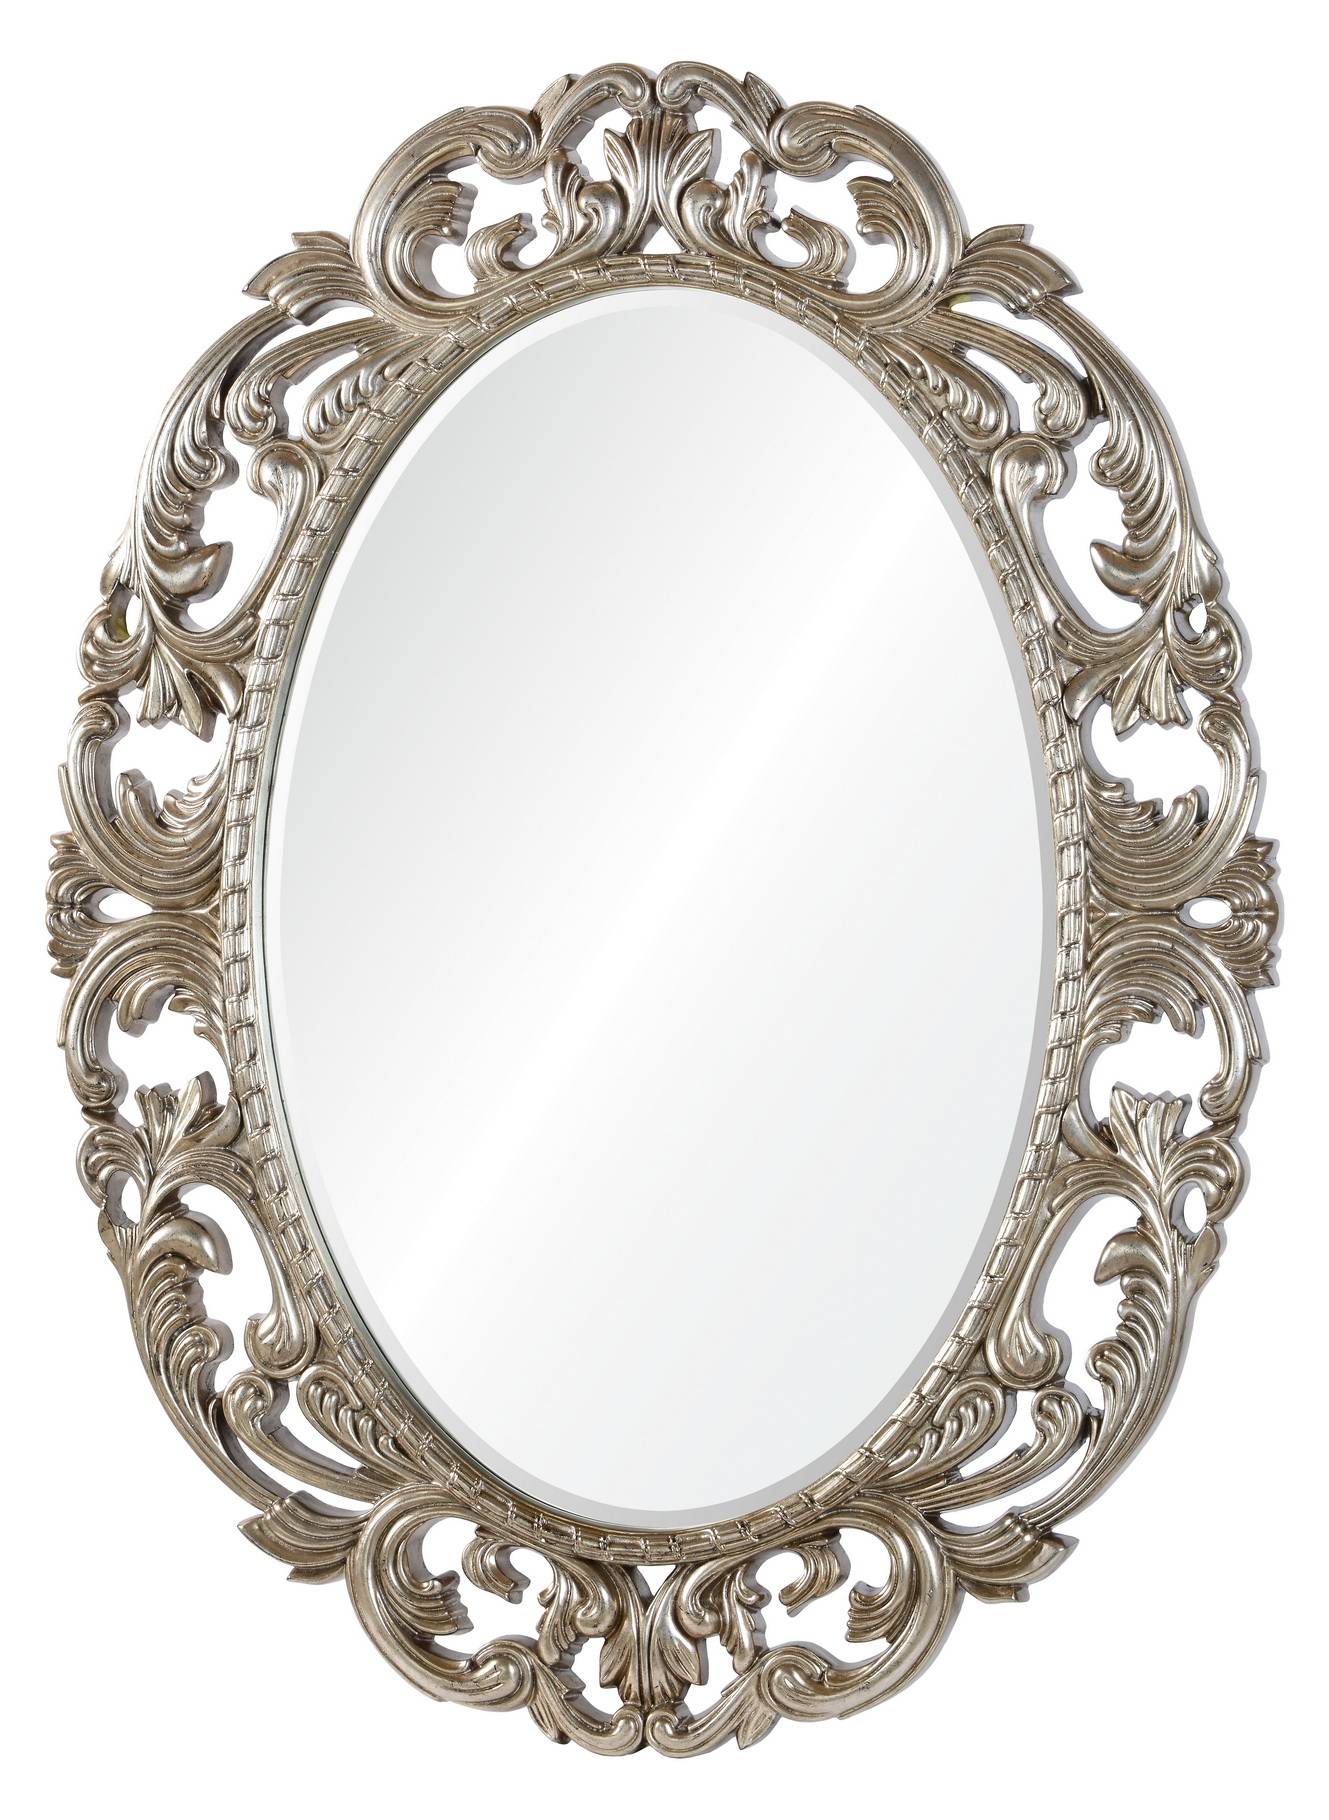 Зеркало настенное недорого. Зеркало Rosa Home a88001-1 Afina антич.серебро. Зеркало Caprigo 123х83 бронза. Зеркало Genry античное серебро. Зеркало Rosa Home a88007-1 Imperial серебро.